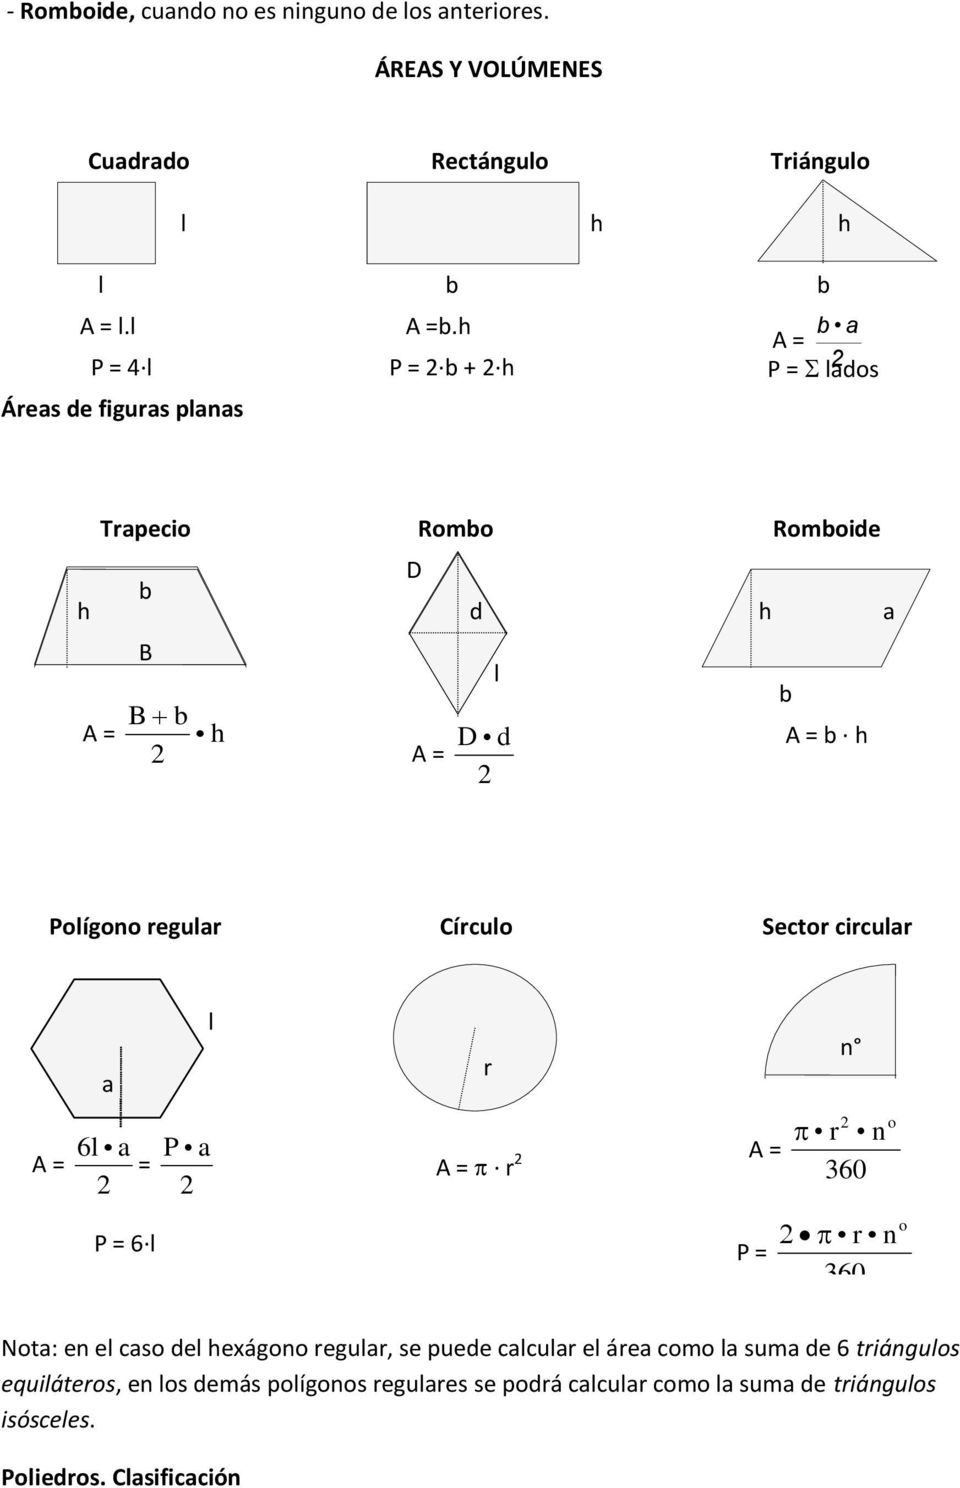 h a A = P = 4 l P = 2 + 2 h P = lados 2 Áreas de figuras planas Trapecio h B A = B h 2 P = lados D Romo d l A = D d 2 P = 4 l Romoide h a A = h P = 2 + 2